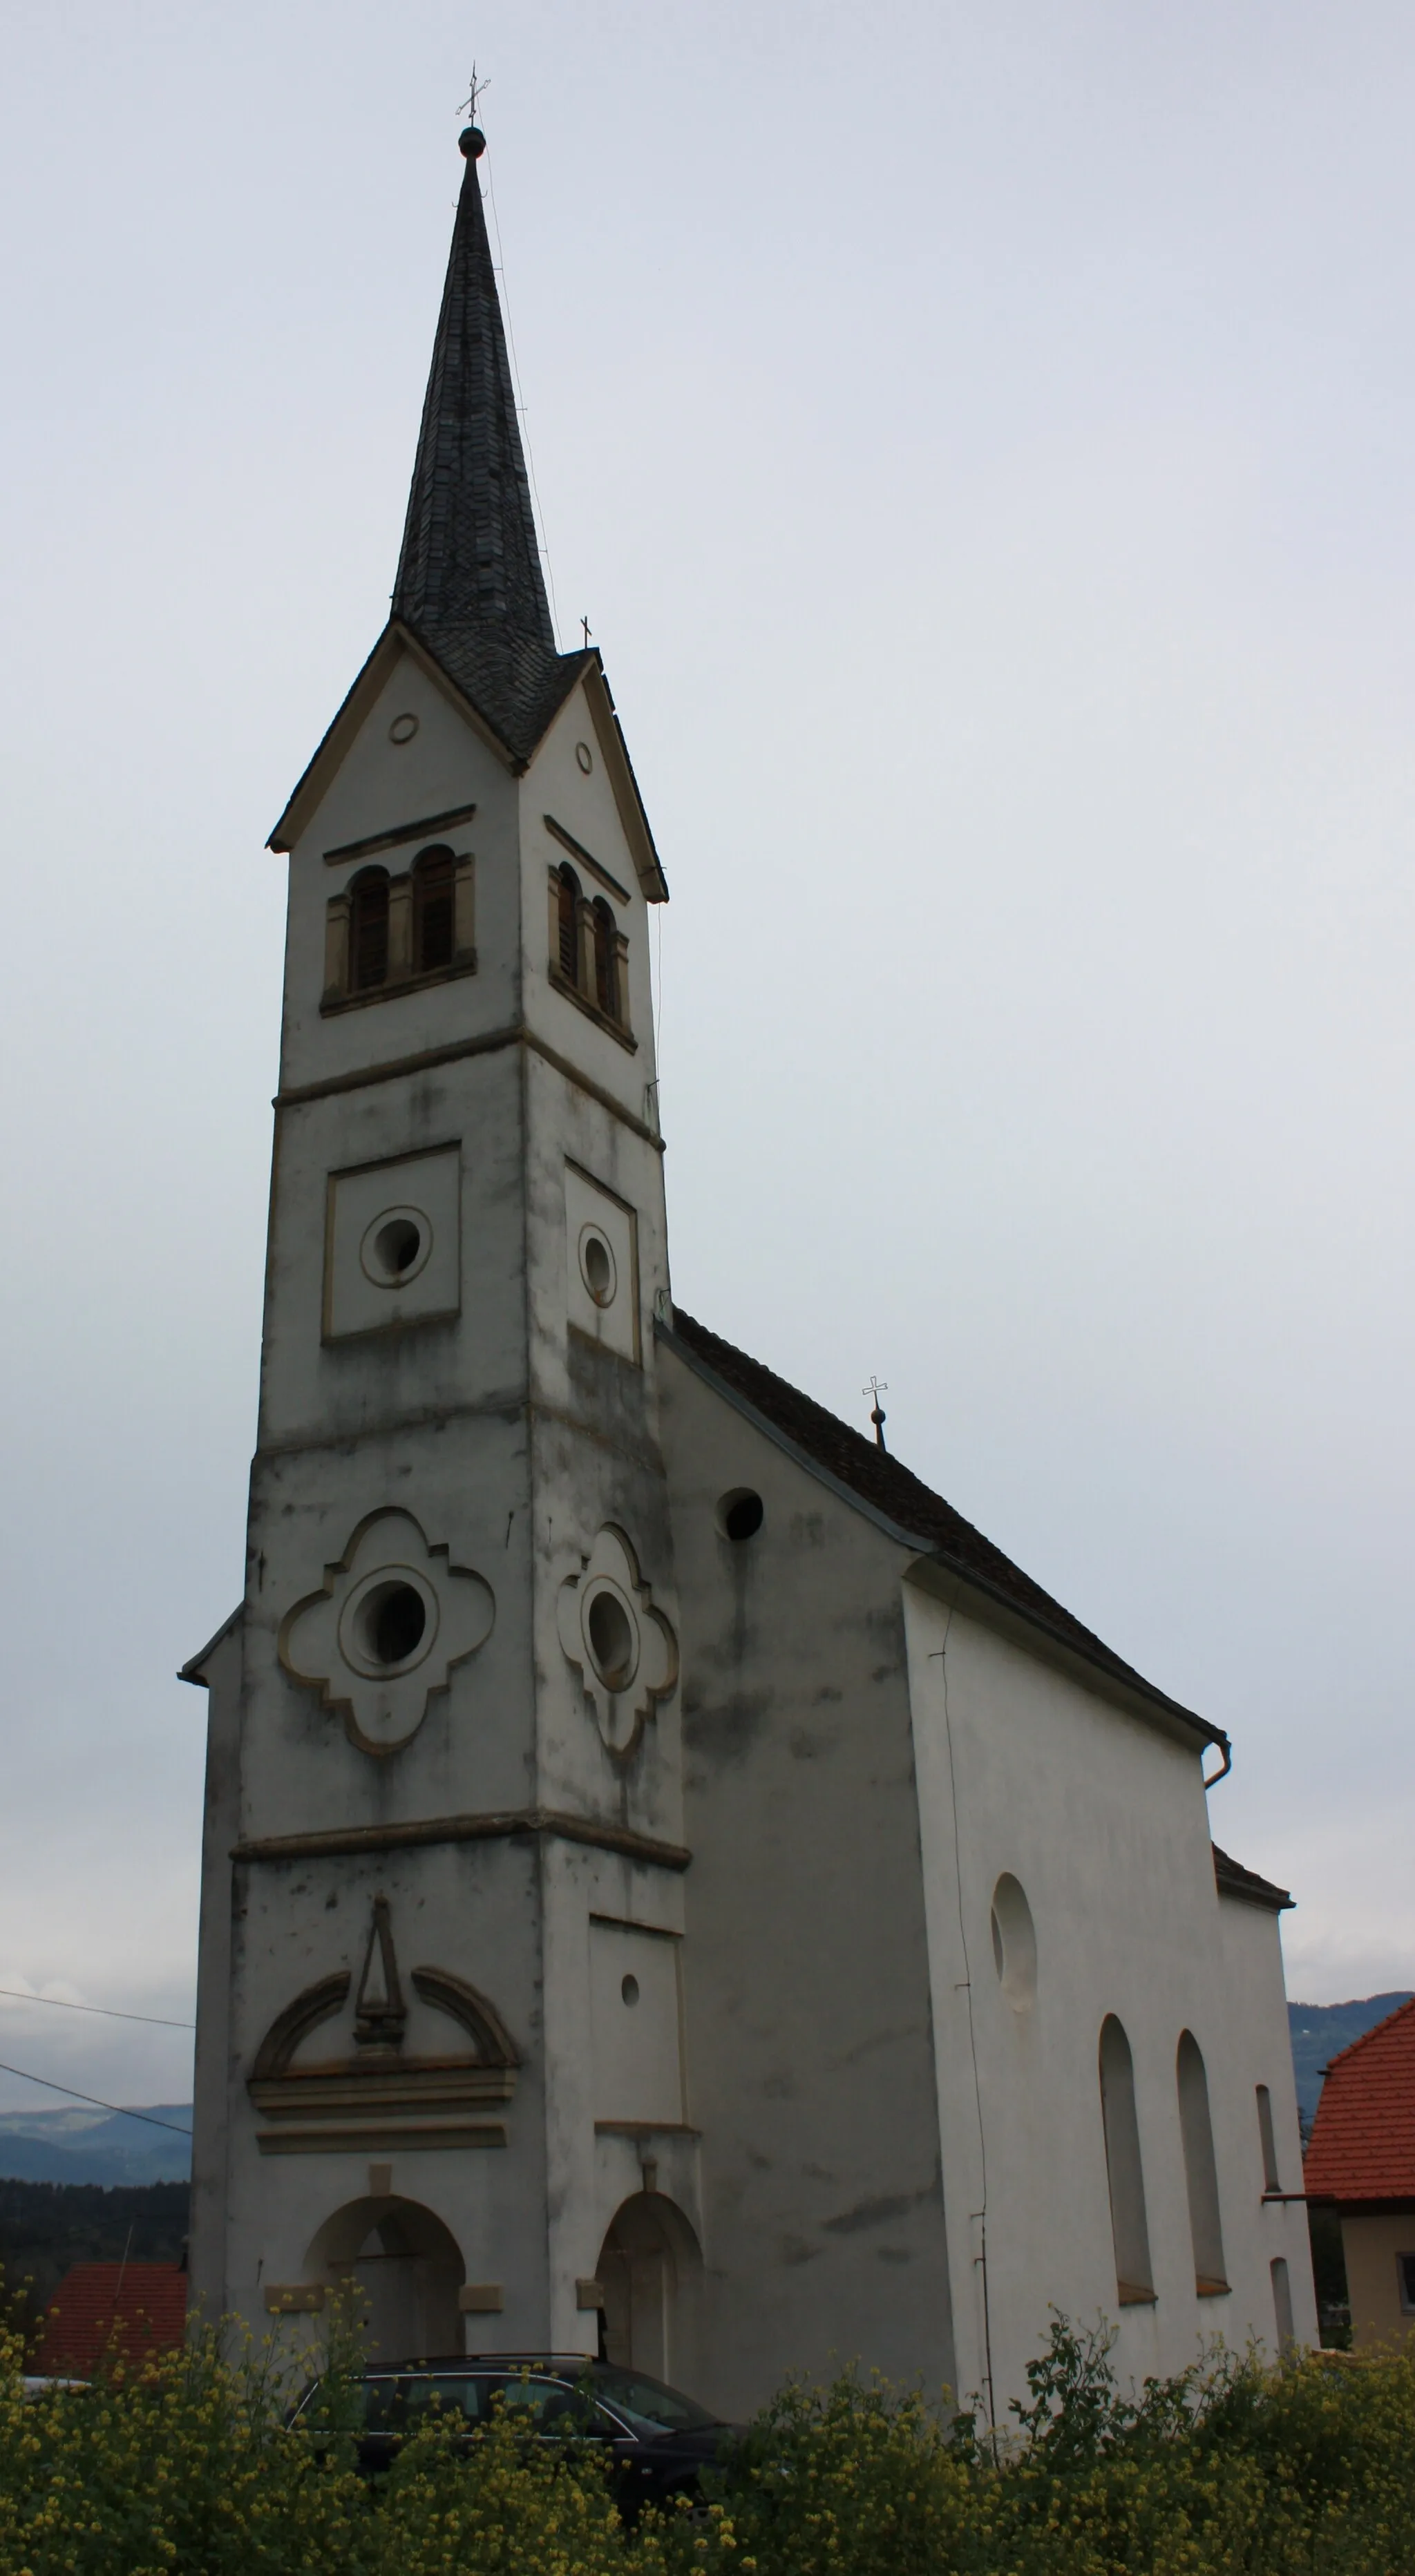 Photo showing: Subsidiary church  Saint Niklaus
Locality: Siegelsdorf

Community:Wolfsberg